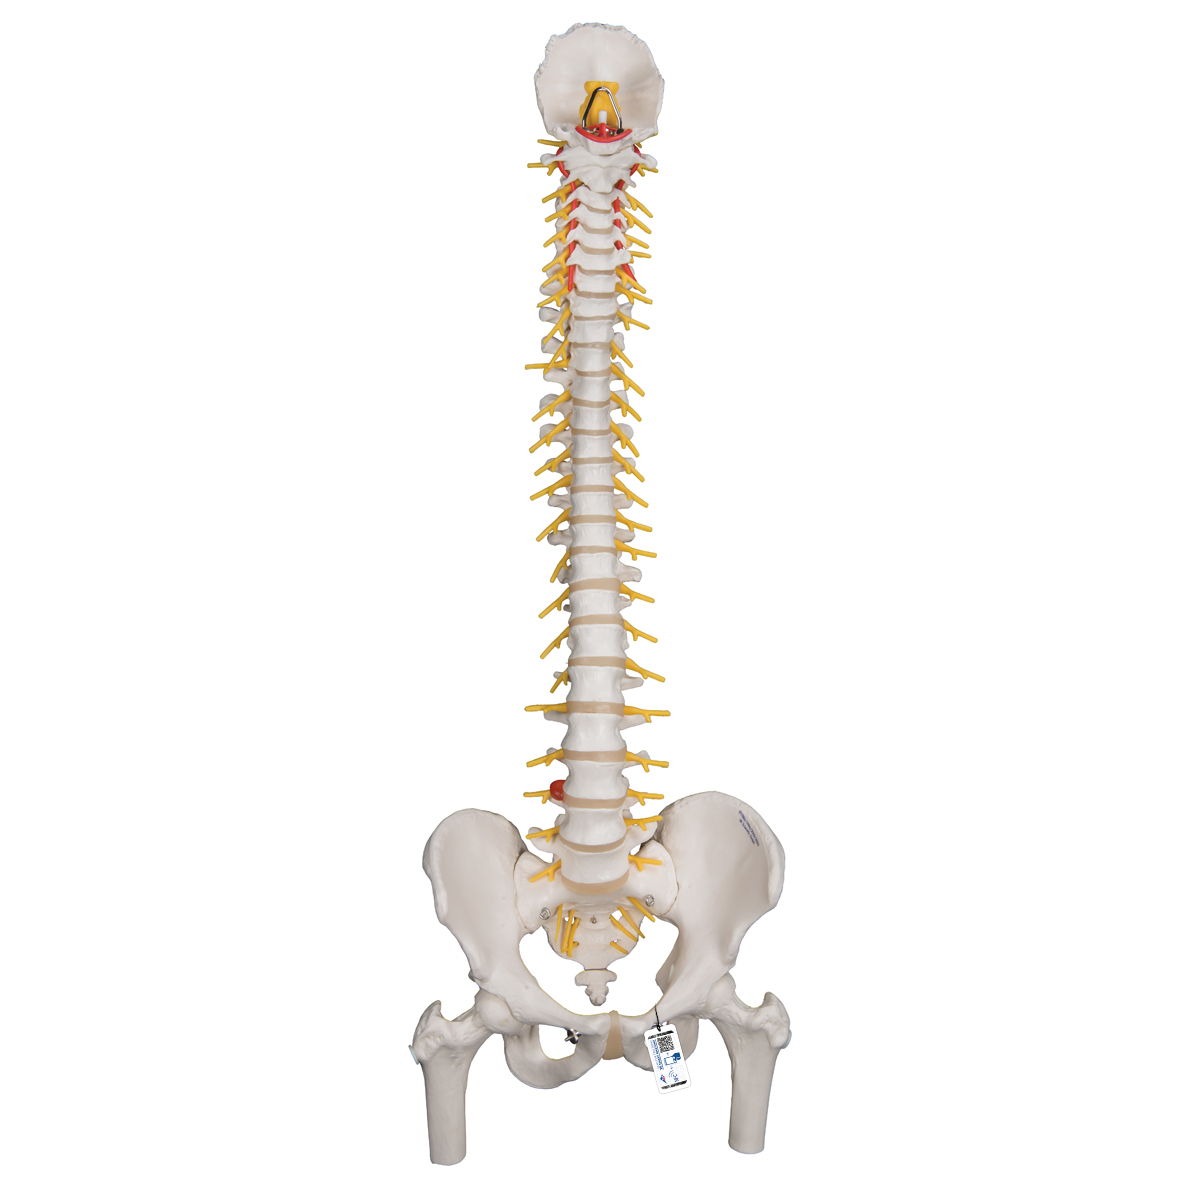 Le squelette humain - 1001630 - VR2113L - Skeletal System - 3B Scientific